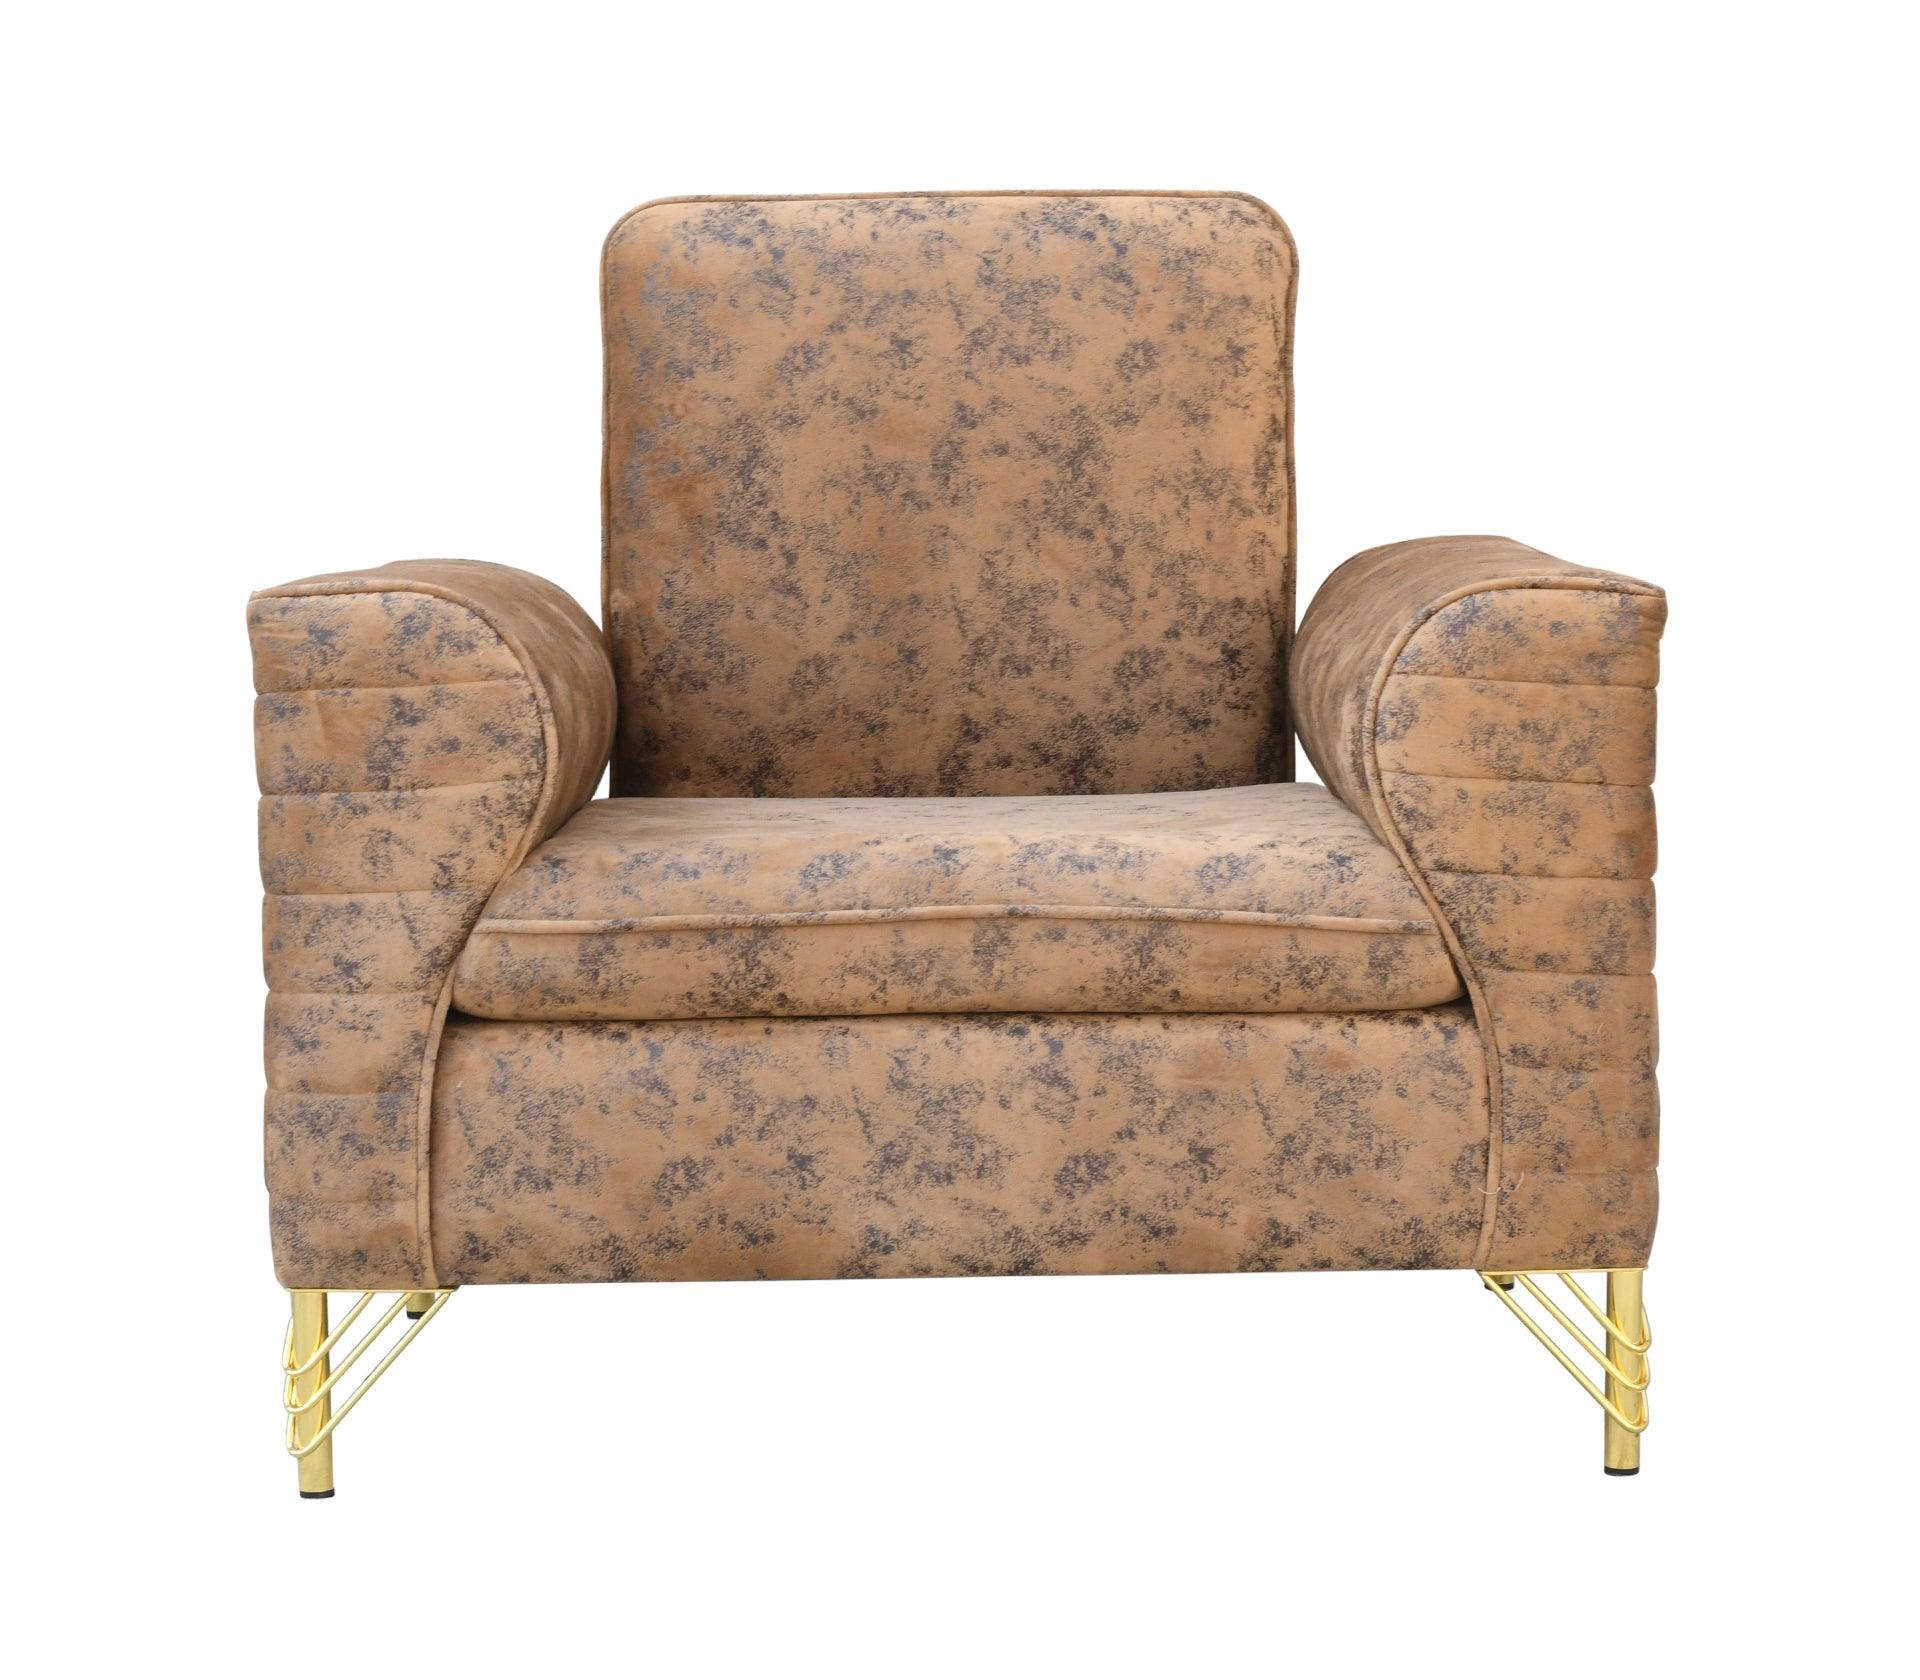 Caramel Cream Sofa Set 3+1+1 With Golden Legs - Furniture Castle